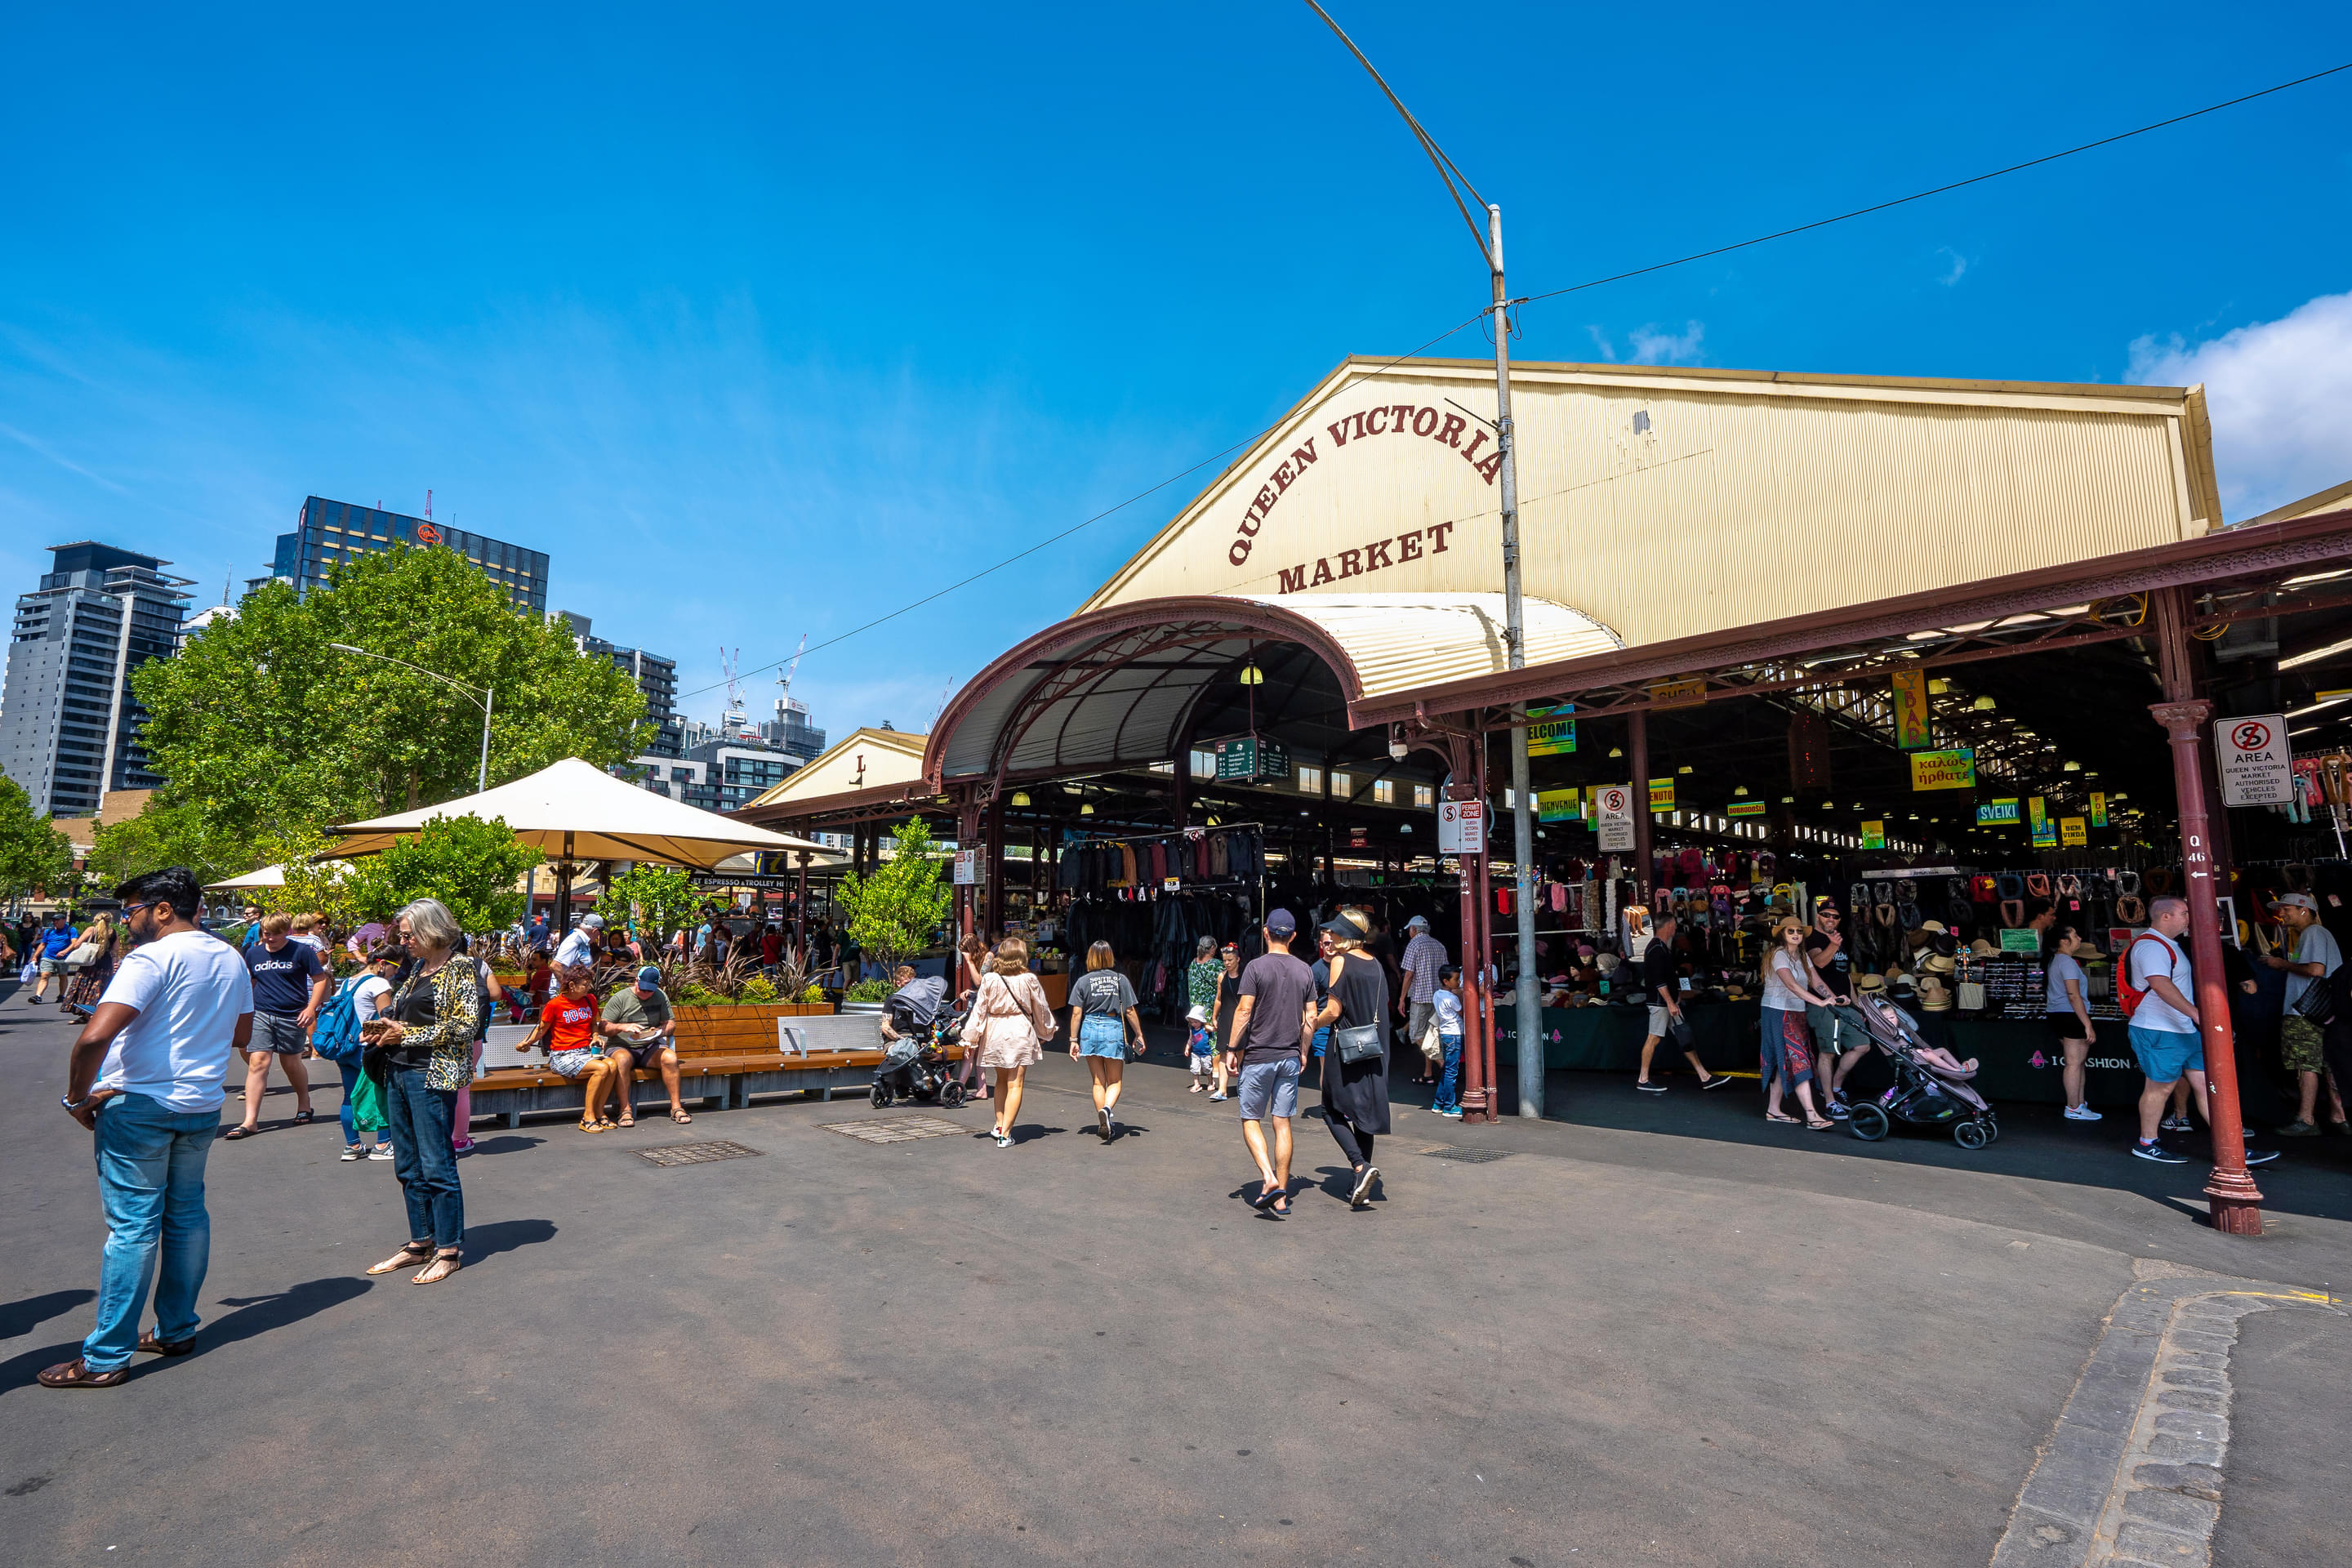 Queen Victoria Market, Melbourne Overview